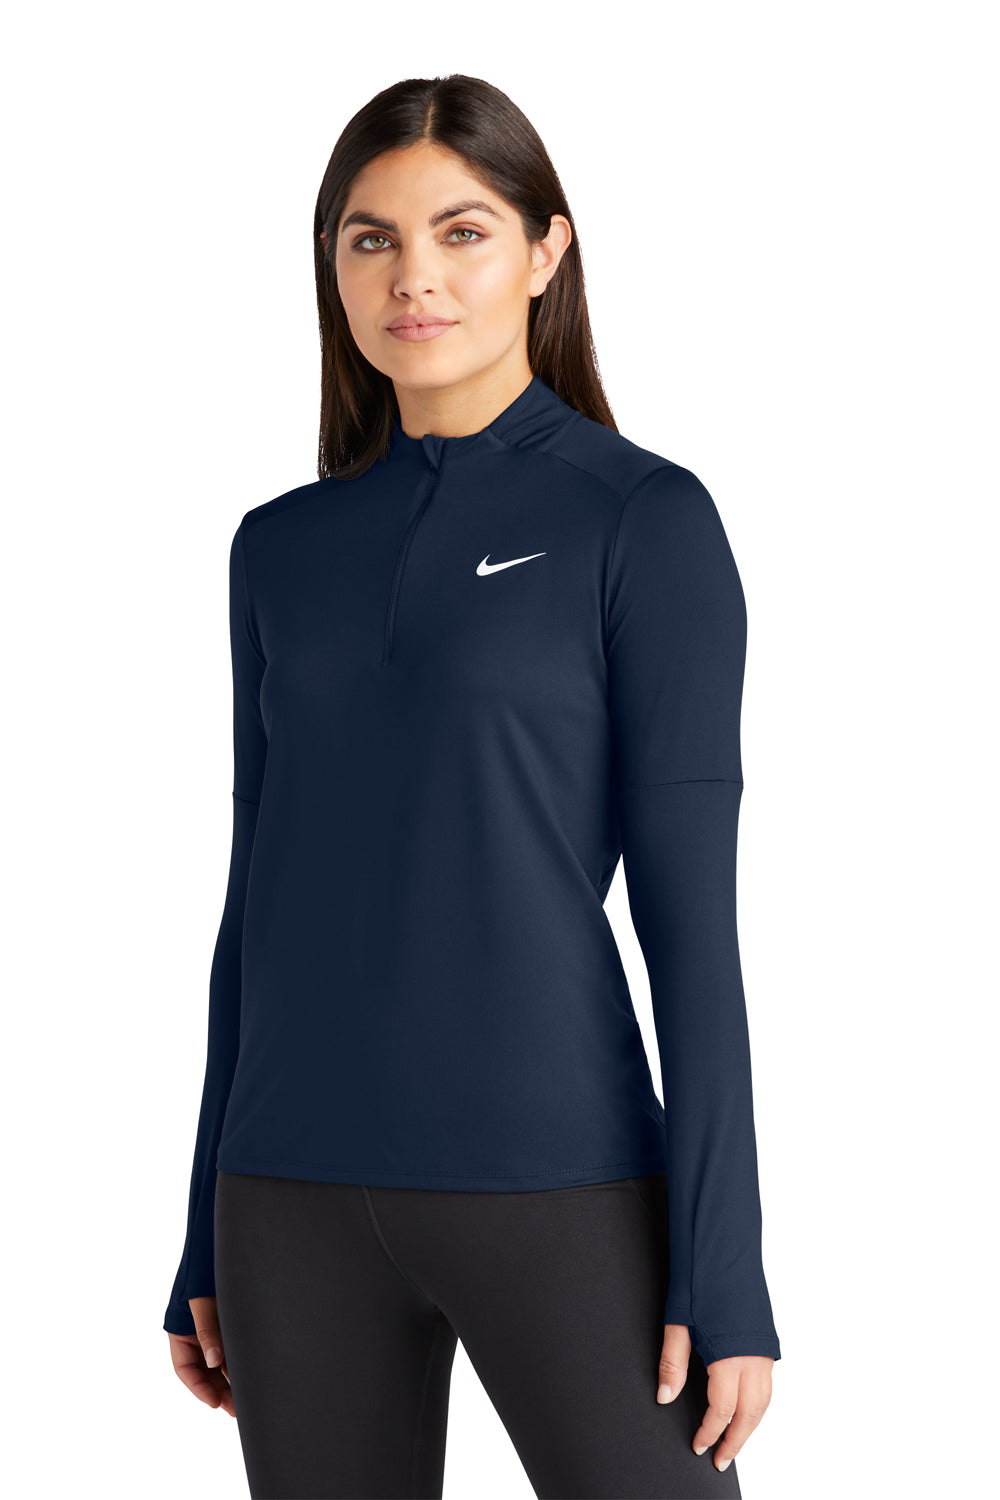 Nike NKDH4951 Womens Element Dri-Fit Moisture Wicking 1/4 Zip Sweatshirt Navy Blue Model 3Q